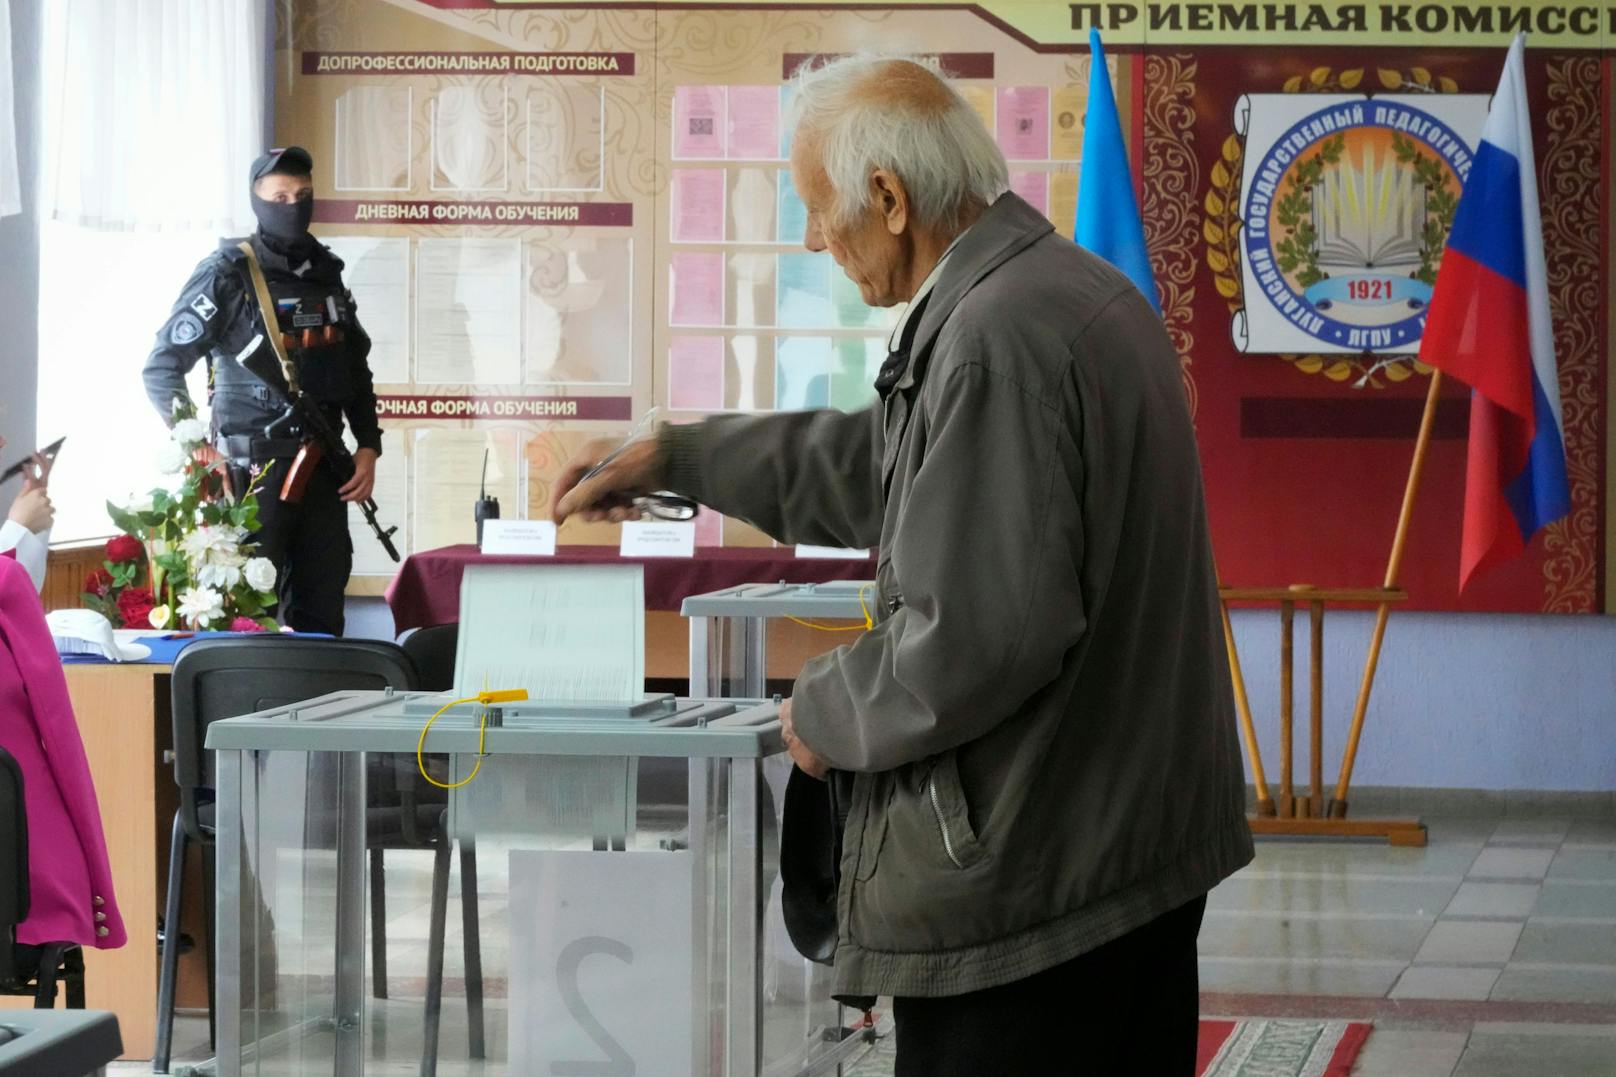 Moskau kündigt "Wahlen" in besetzten Gebieten an